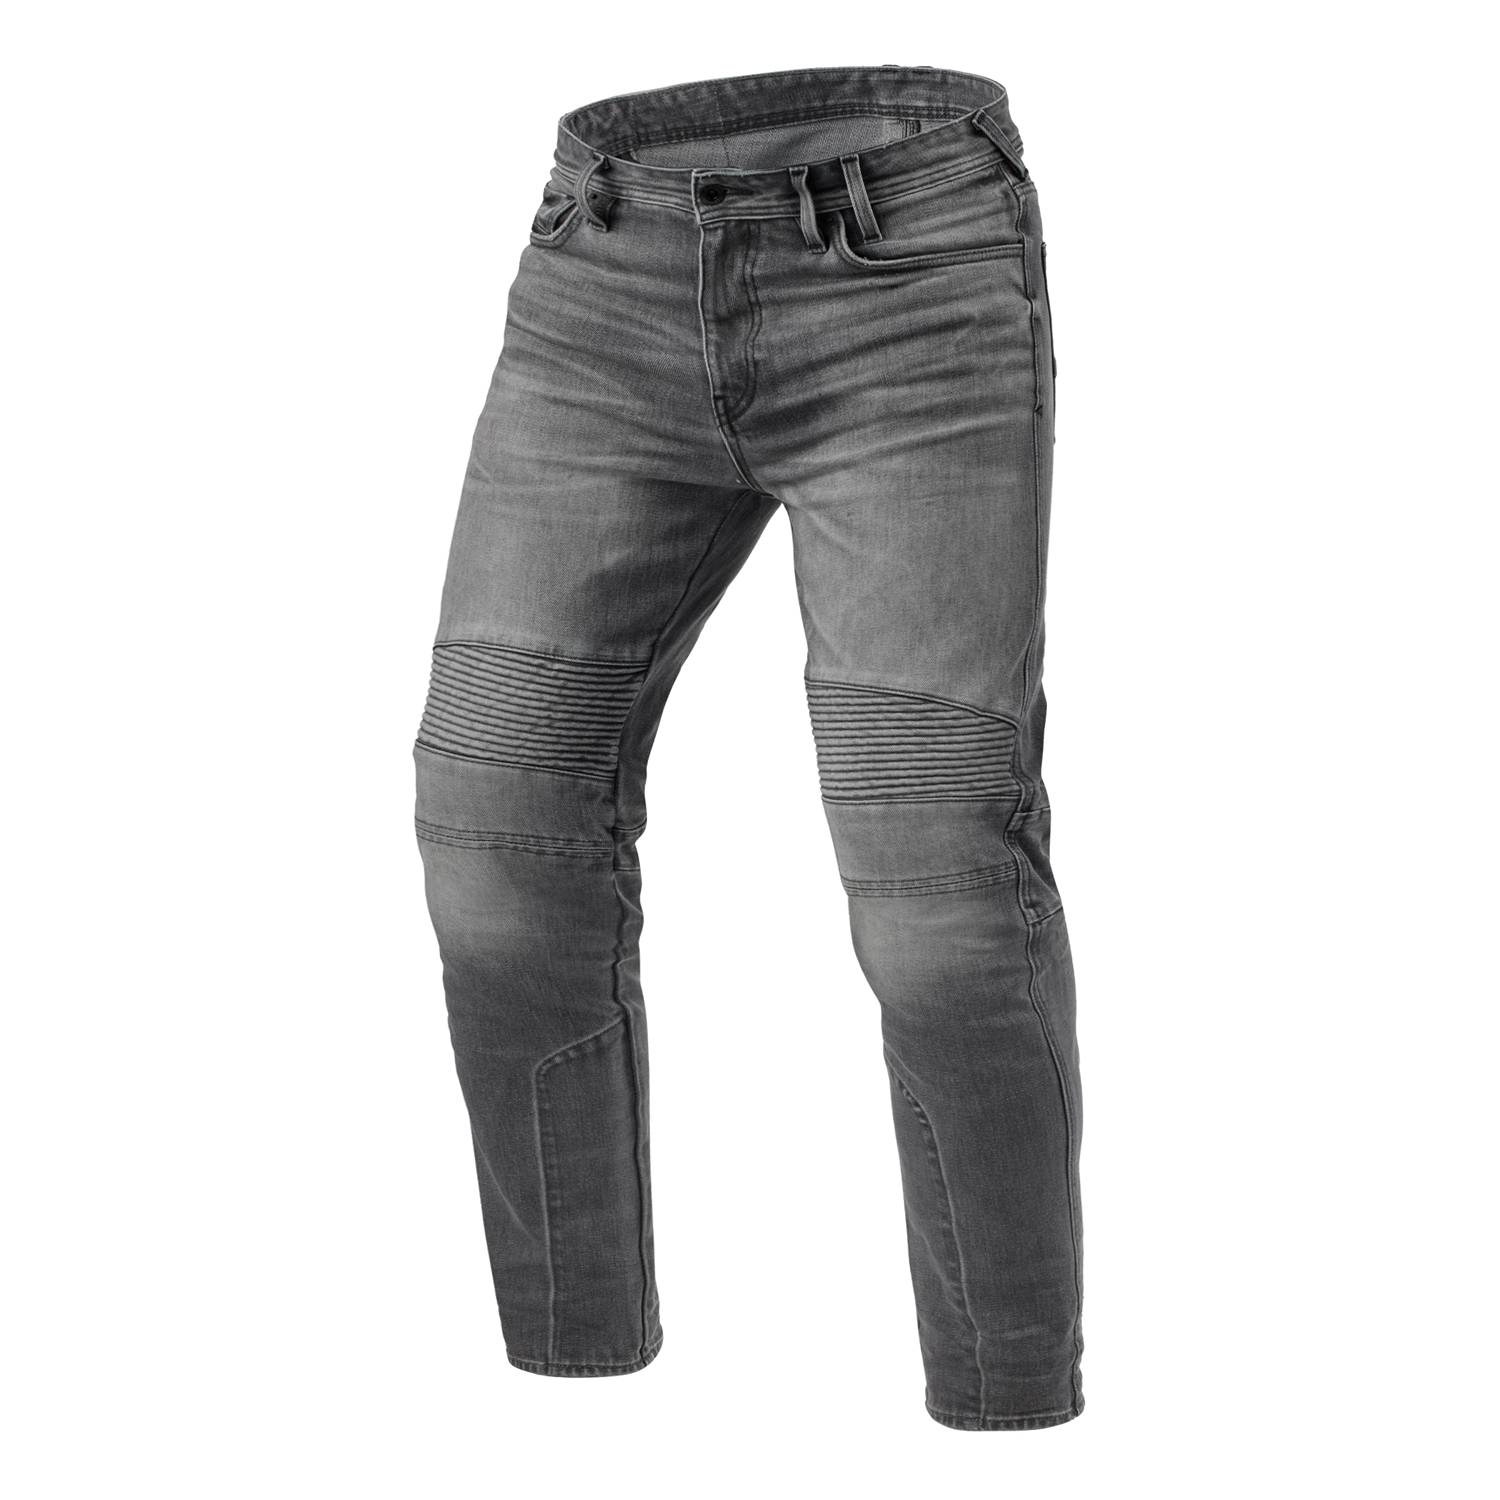 Image of REV'IT! Jeans Moto 2 TF Medium Grey Used L36 Motorcycle Jeans Size L36/W32 EN